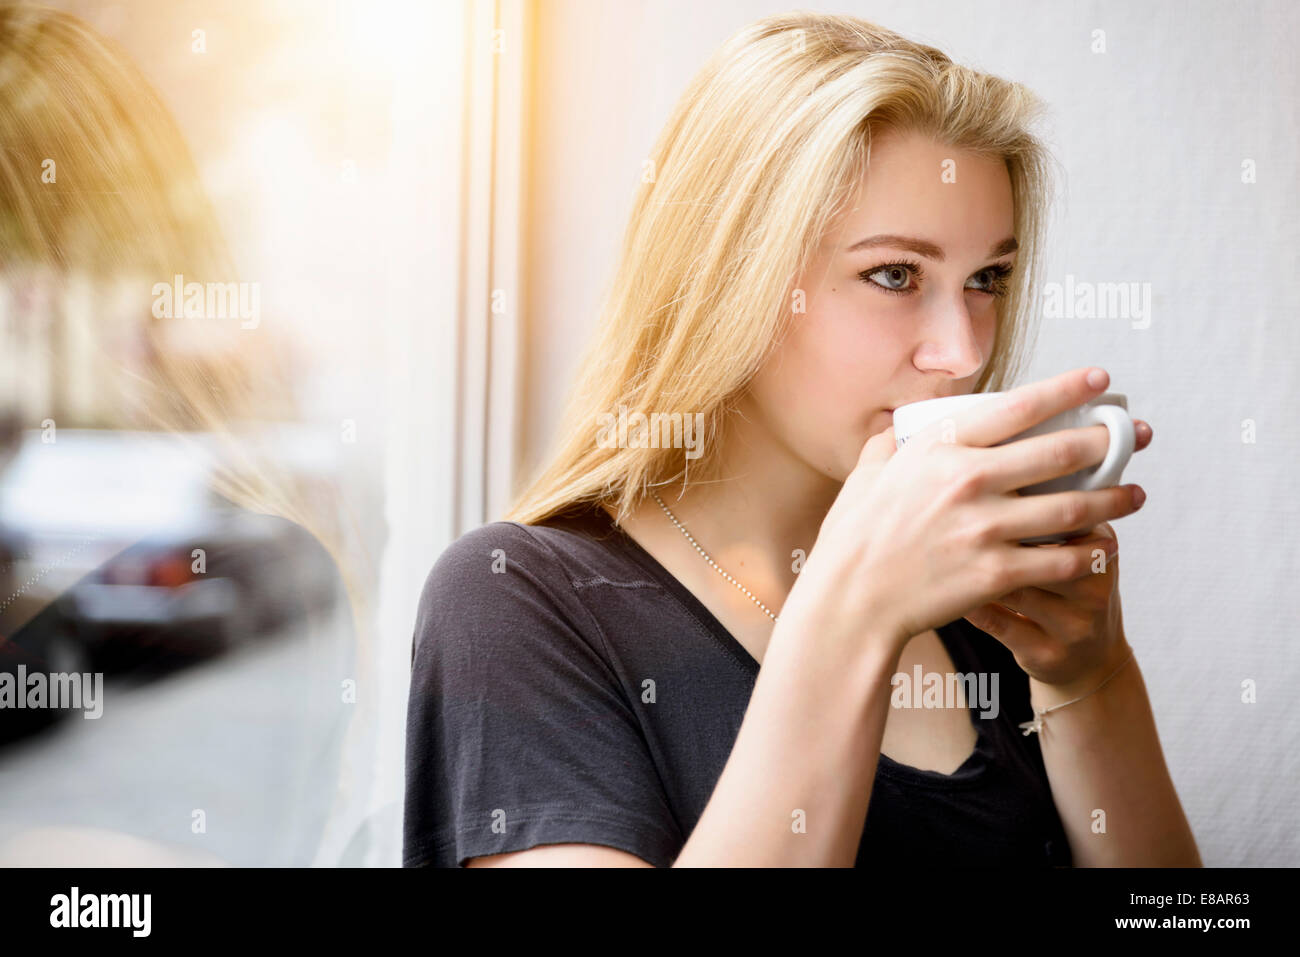 Young woman drinking coffee in window seat Stock Photo